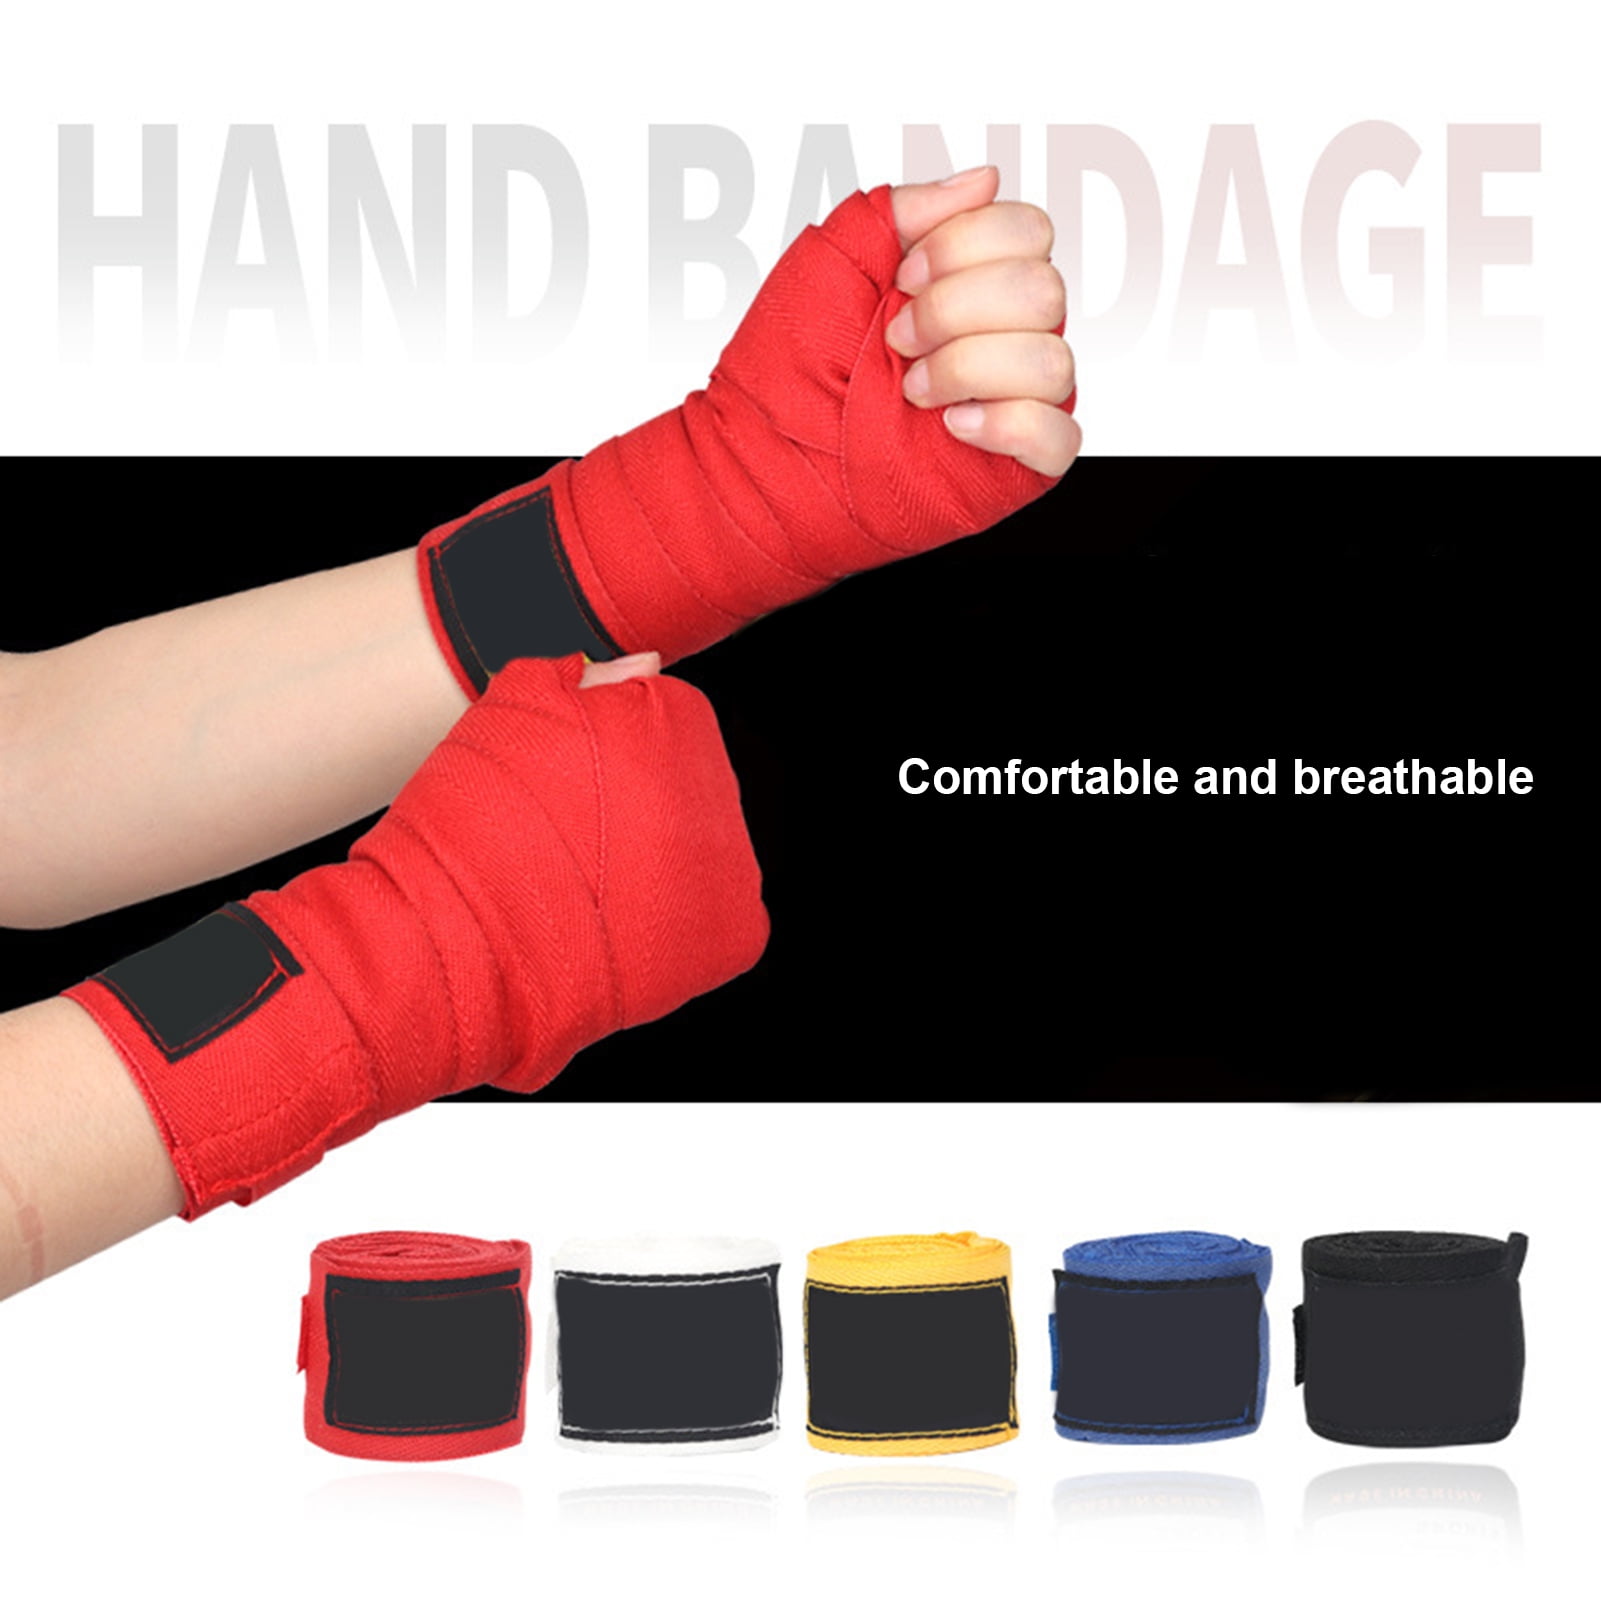 Thumb Loop Cotton Training Wrist Protector Fist Bandage Glove Boxing Hand Wraps 